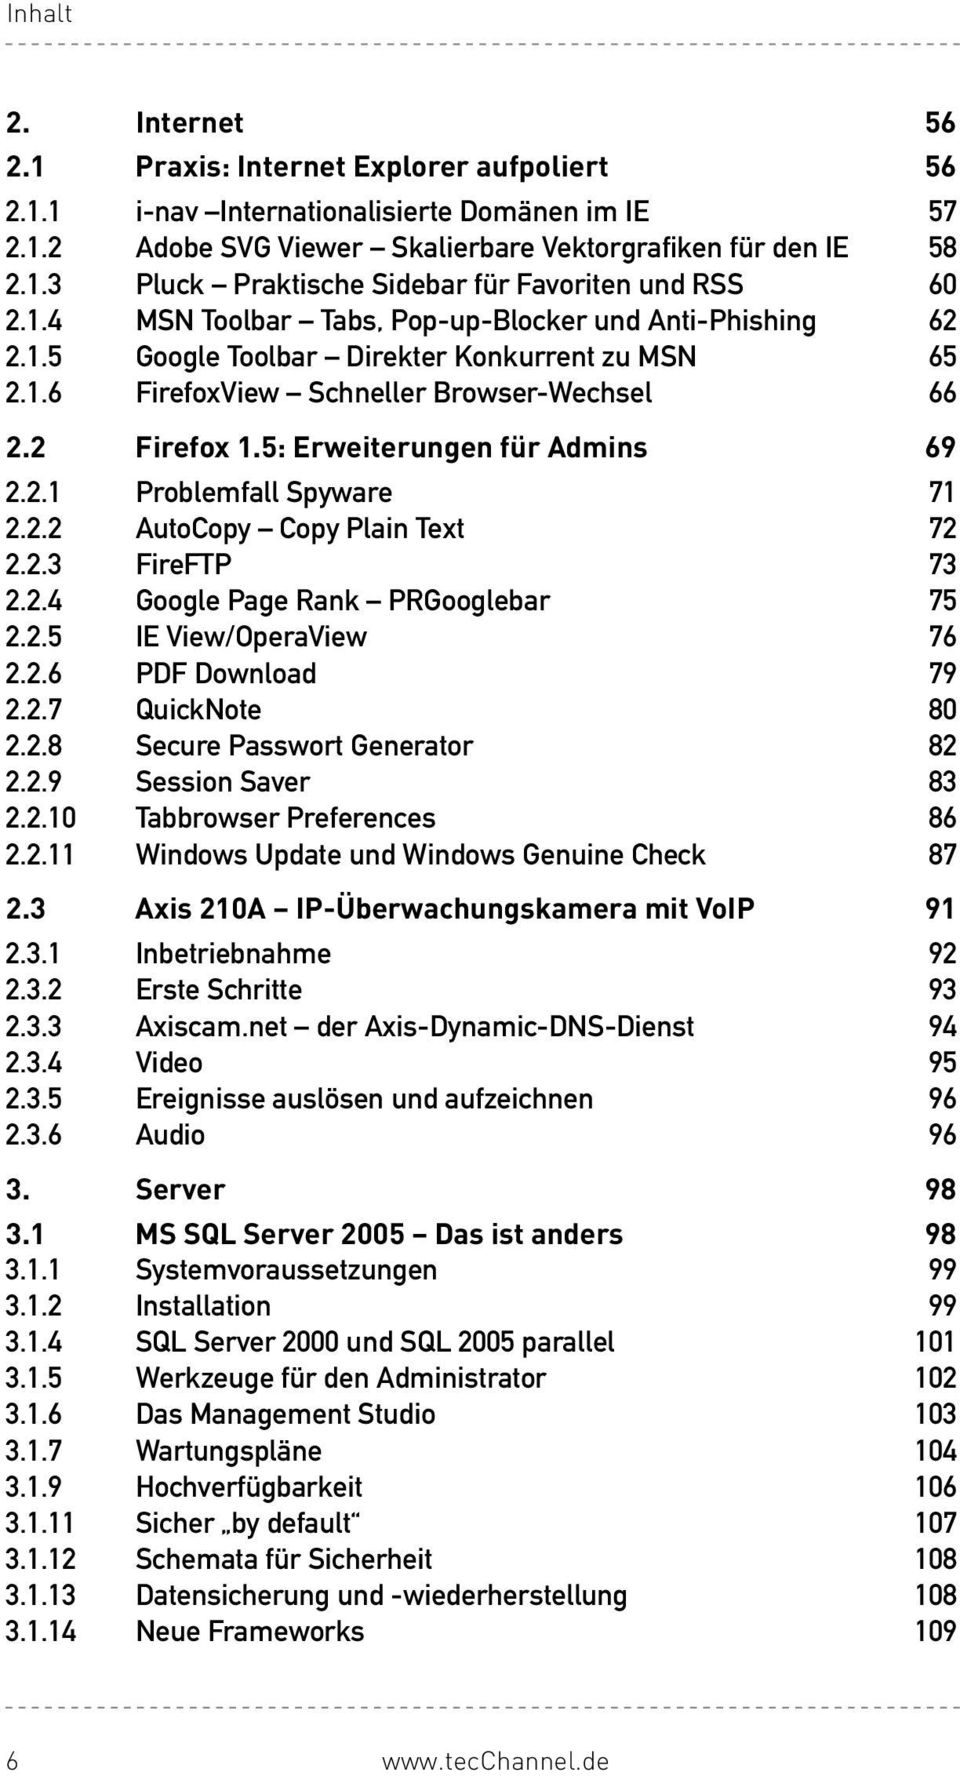 5: Erweiterungen für Admins 69 2.2.1 Problemfall Spyware 71 2.2.2 AutoCopy Copy Plain Text 72 2.2.3 FireFTP 73 2.2.4 Google Page Rank PRGooglebar 75 2.2.5 IE View/OperaView 76 2.2.6 PDF Download 79 2.